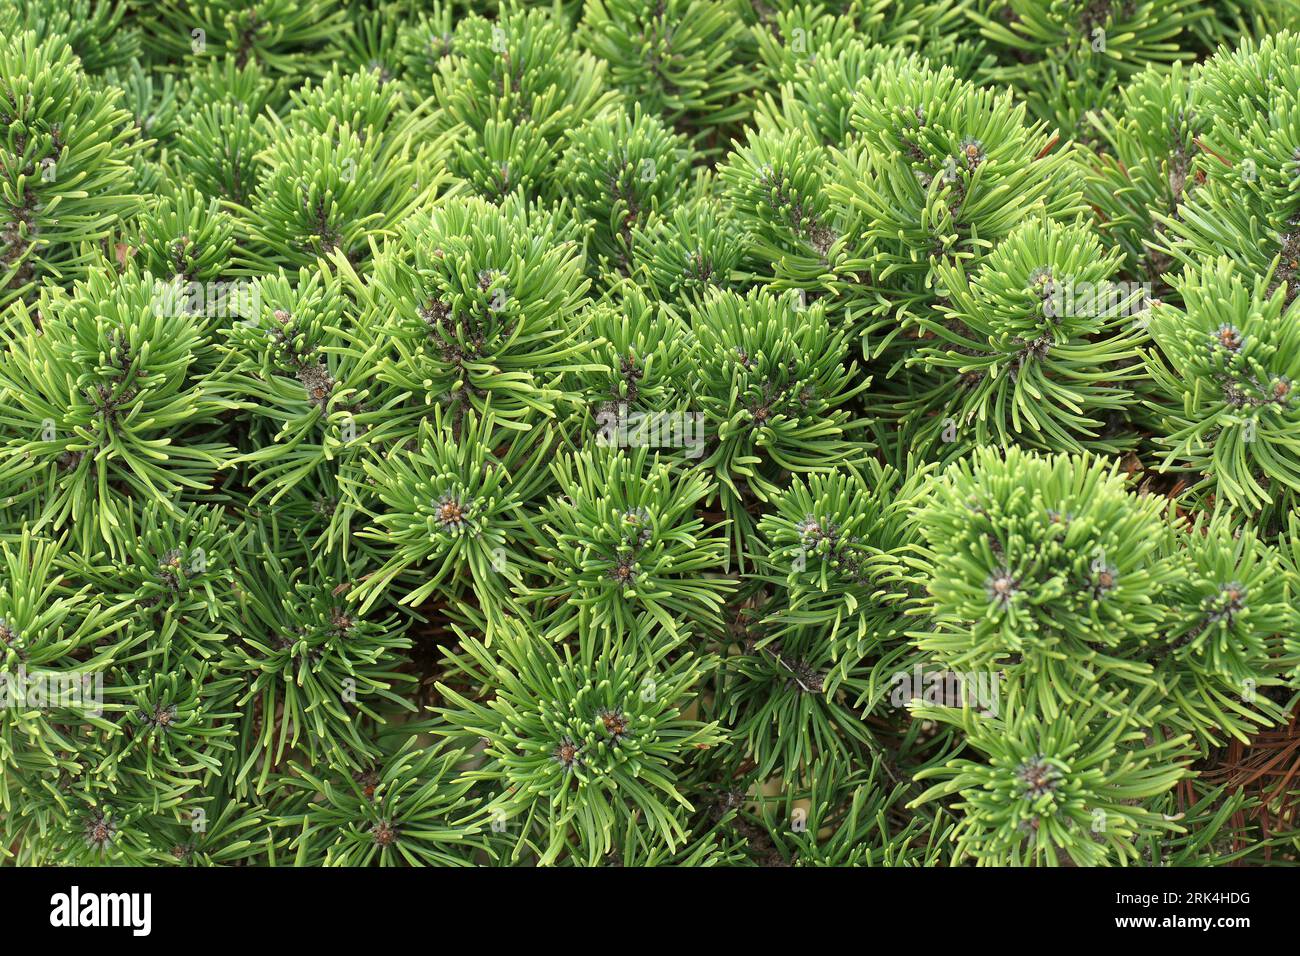 Closeup of the needle-like leaves of the evergreen dwarf pine tree Pinus mugo tuffet. Stock Photo